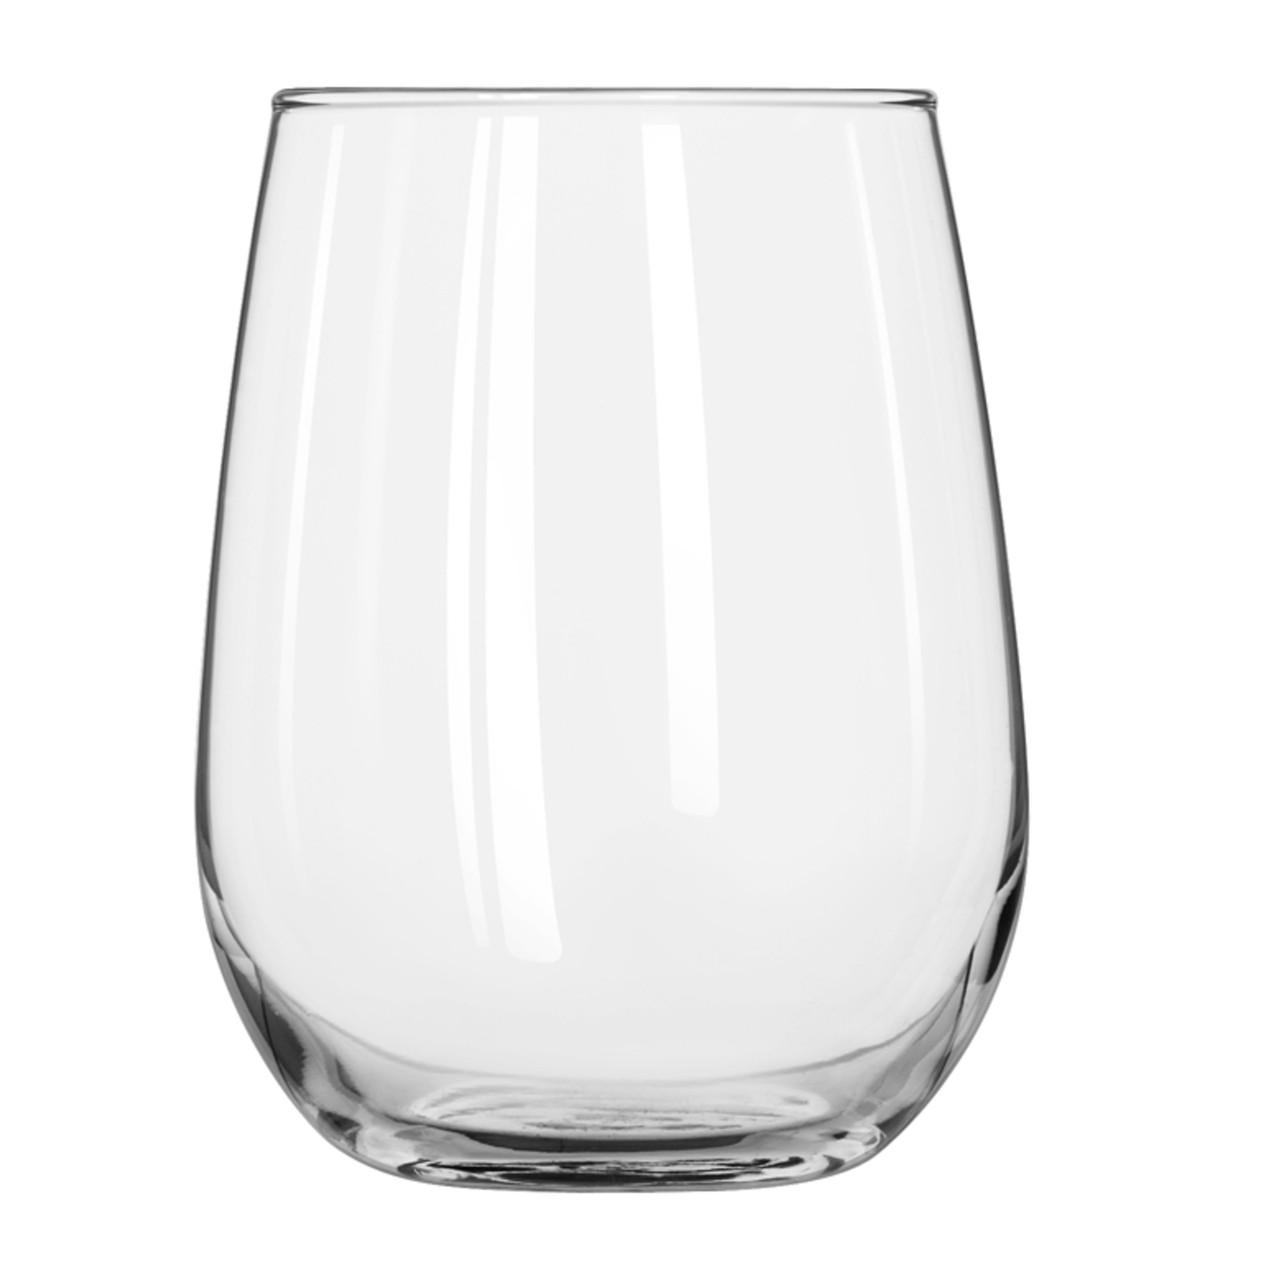 Libbey Vina Stemless White Wine Glasses, Set of 4